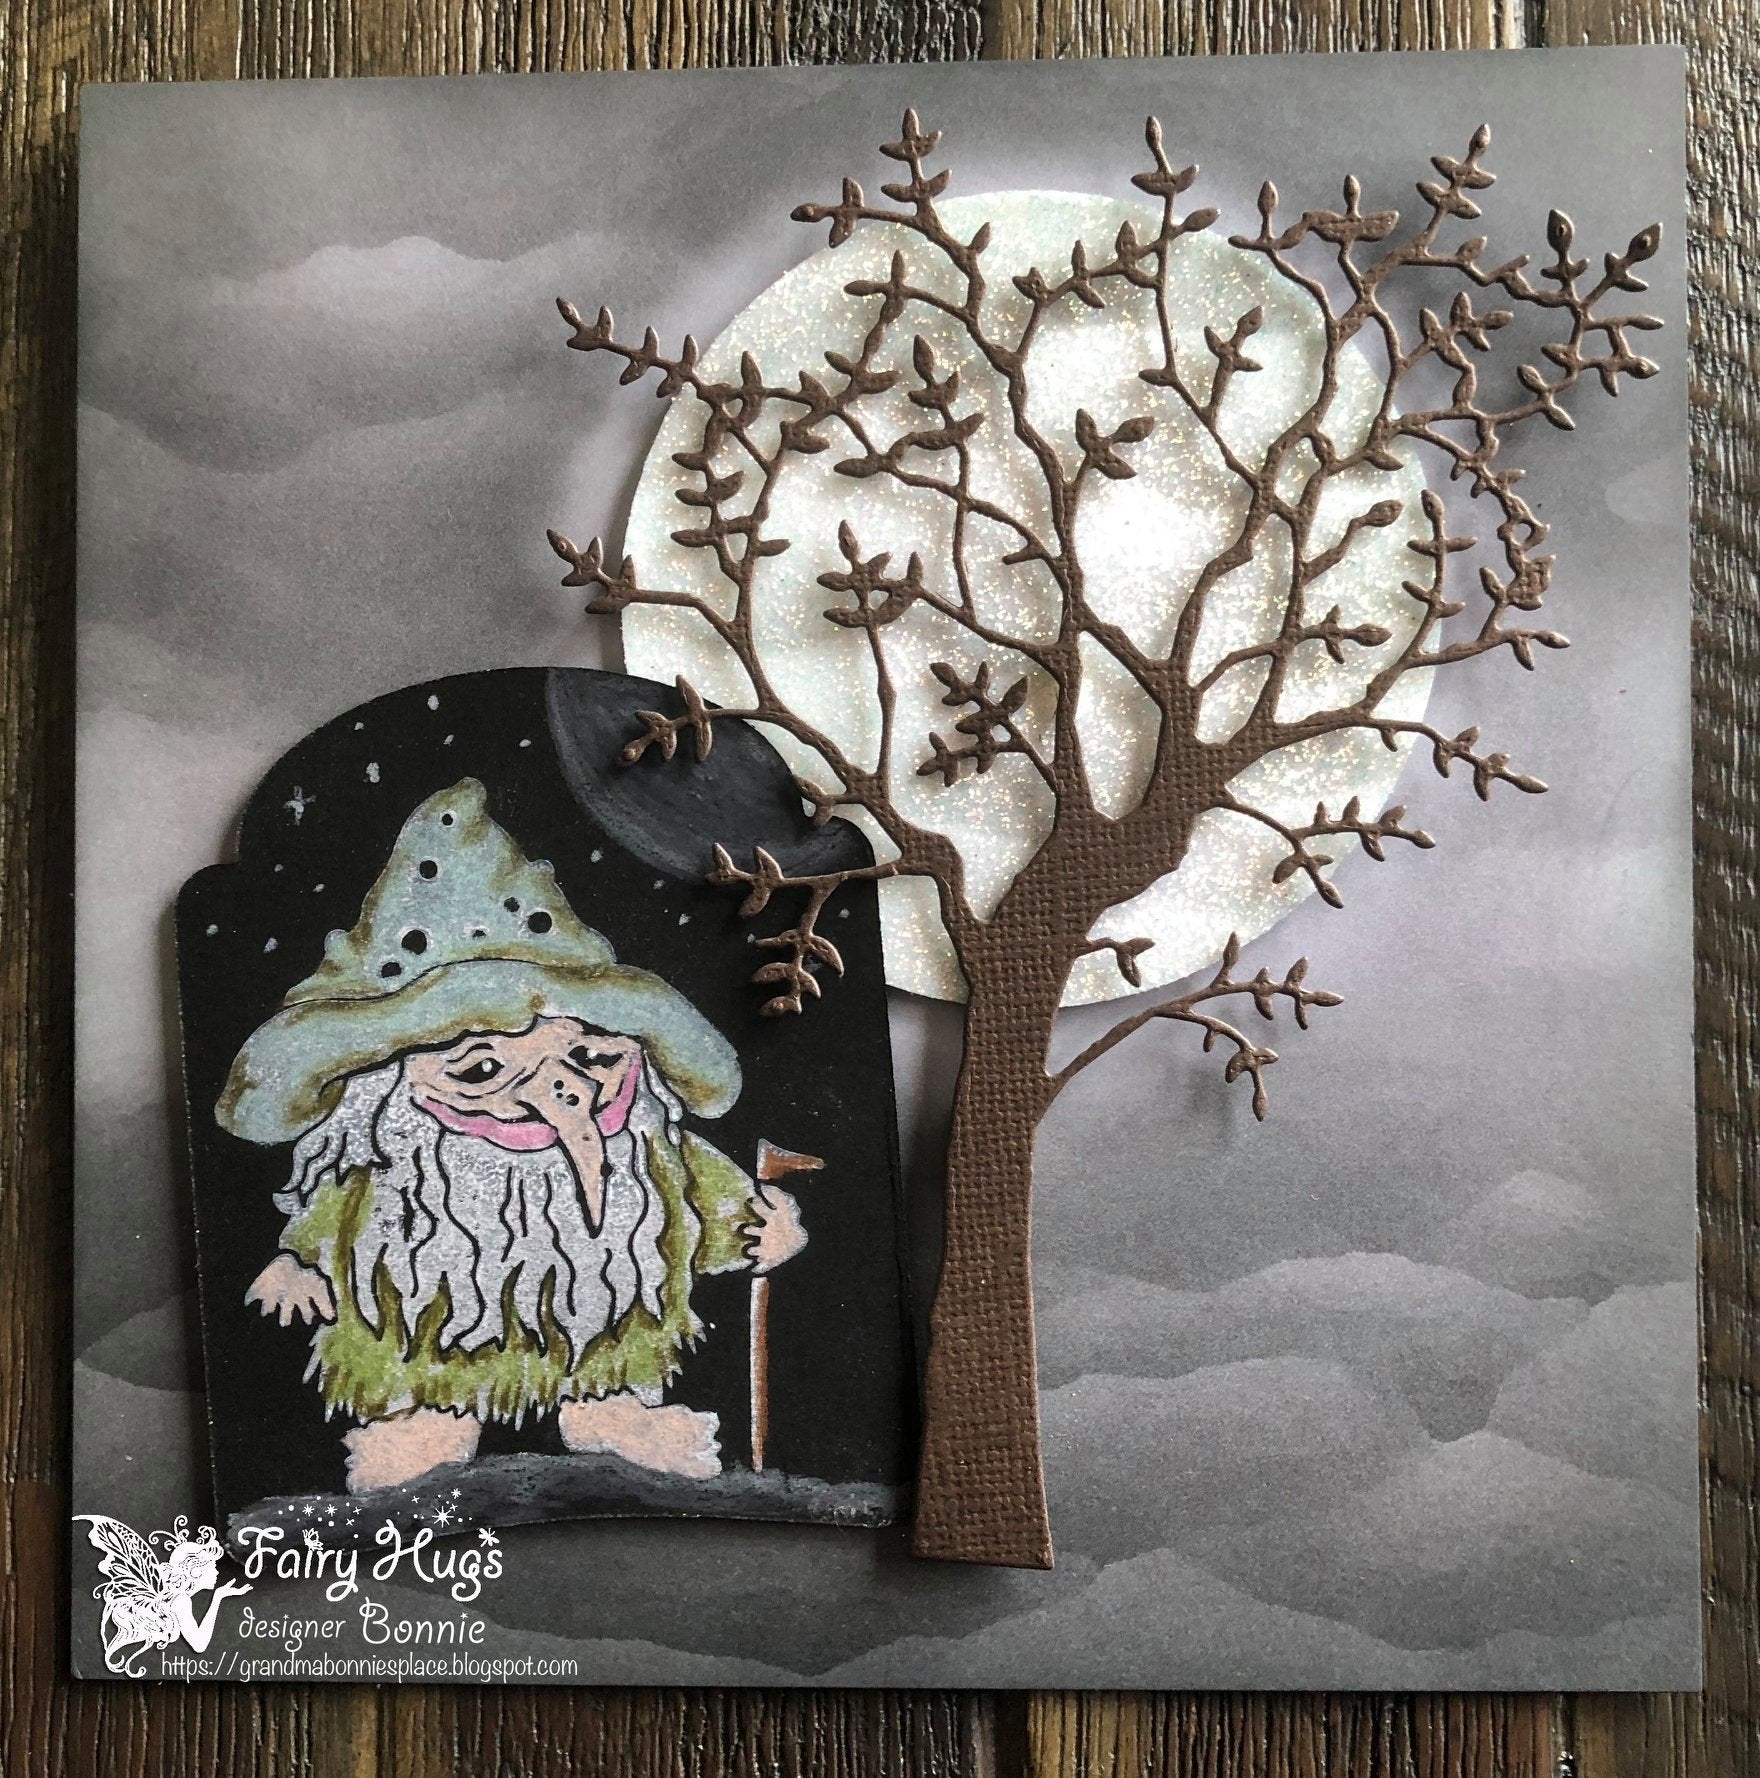 Fairy Hugs - Backgrounds - 6" x 6" - Moon Glow Grayscale